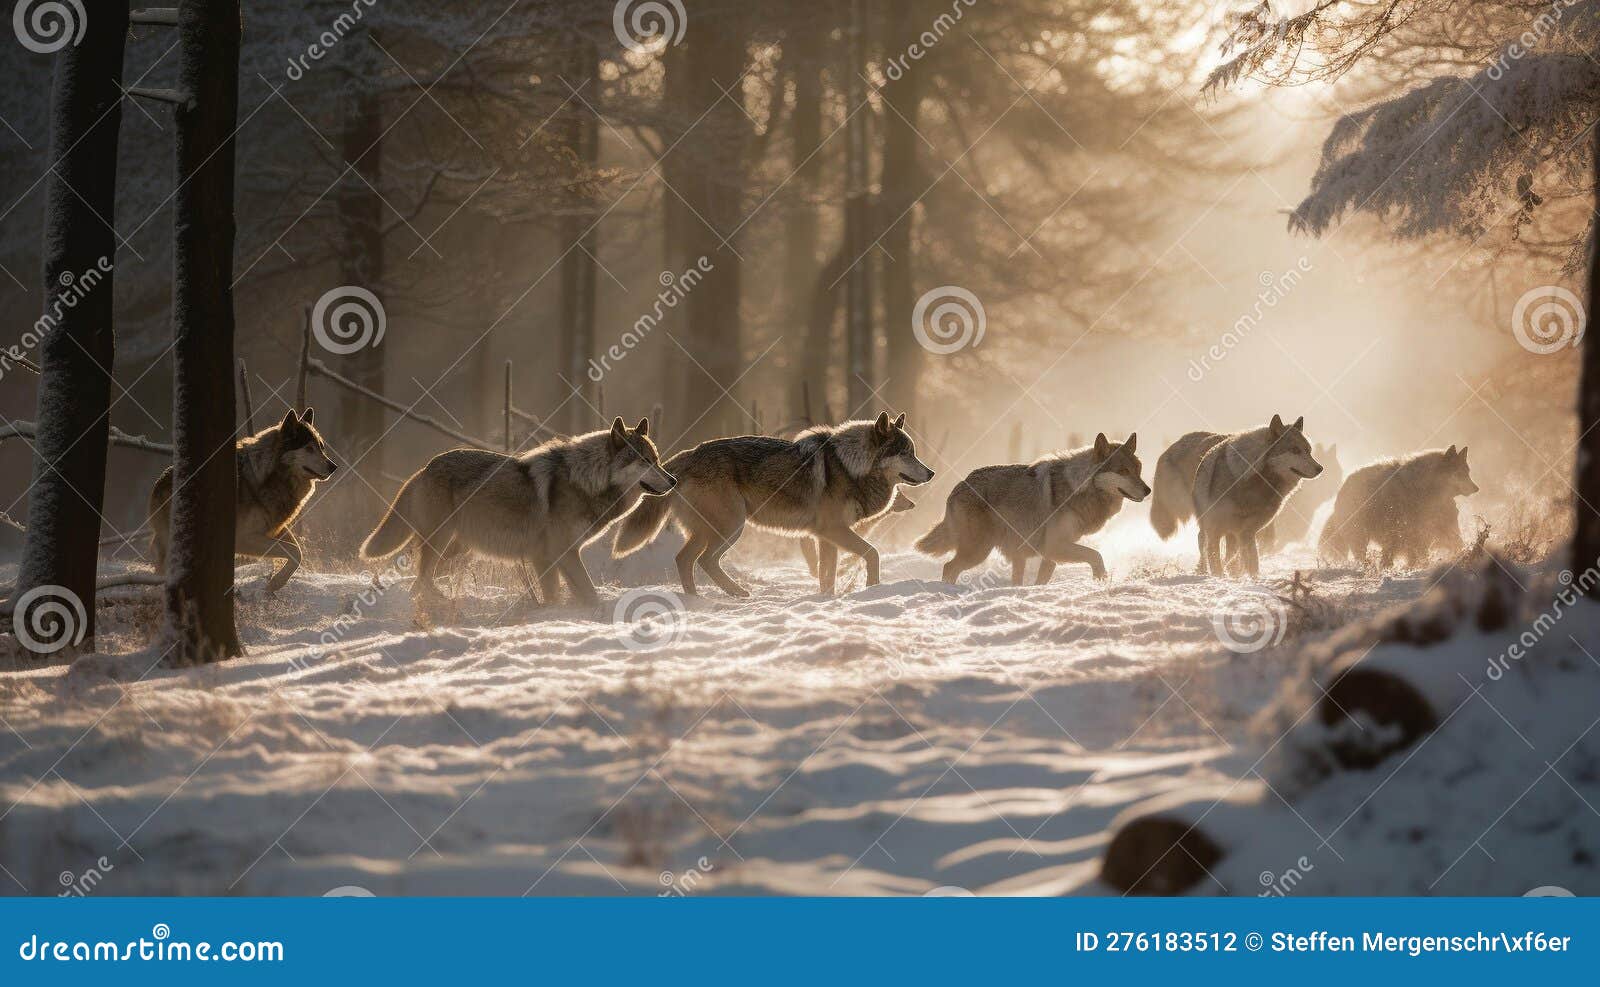 dawn run: wolves in snowy forest